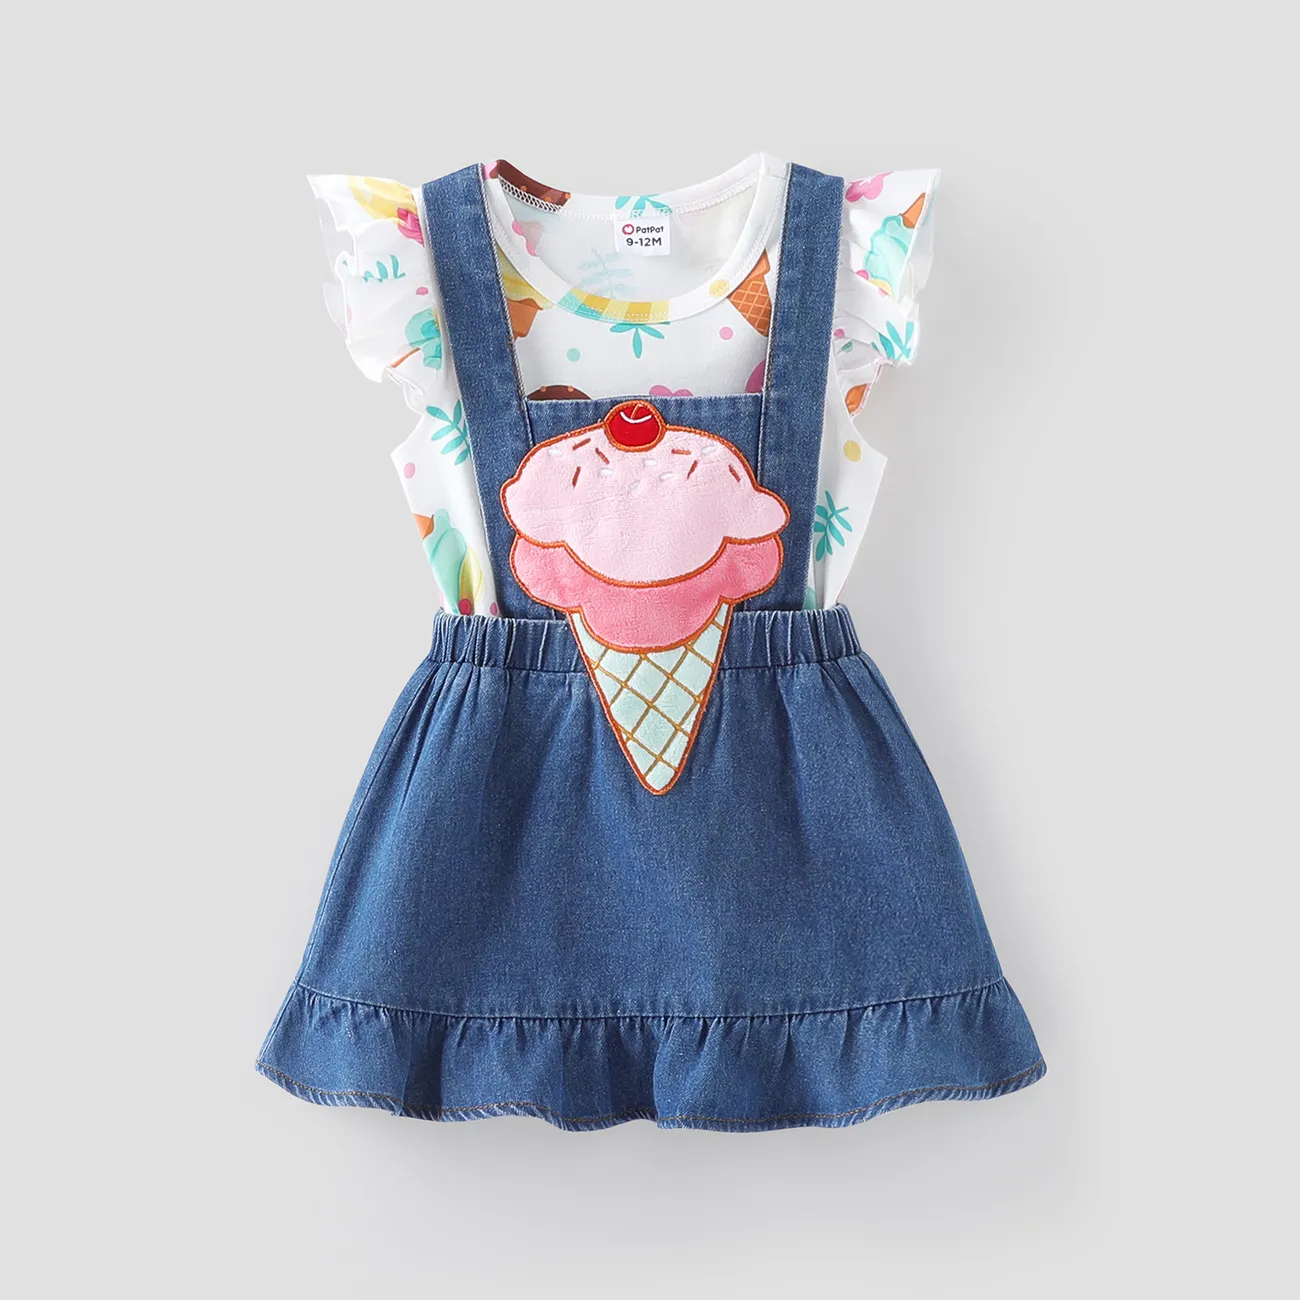 Baby/Toddler Girl 2pcs Ice Cream Print Tee and Embroidery Overall Dress Set DENIMBLUE big image 1